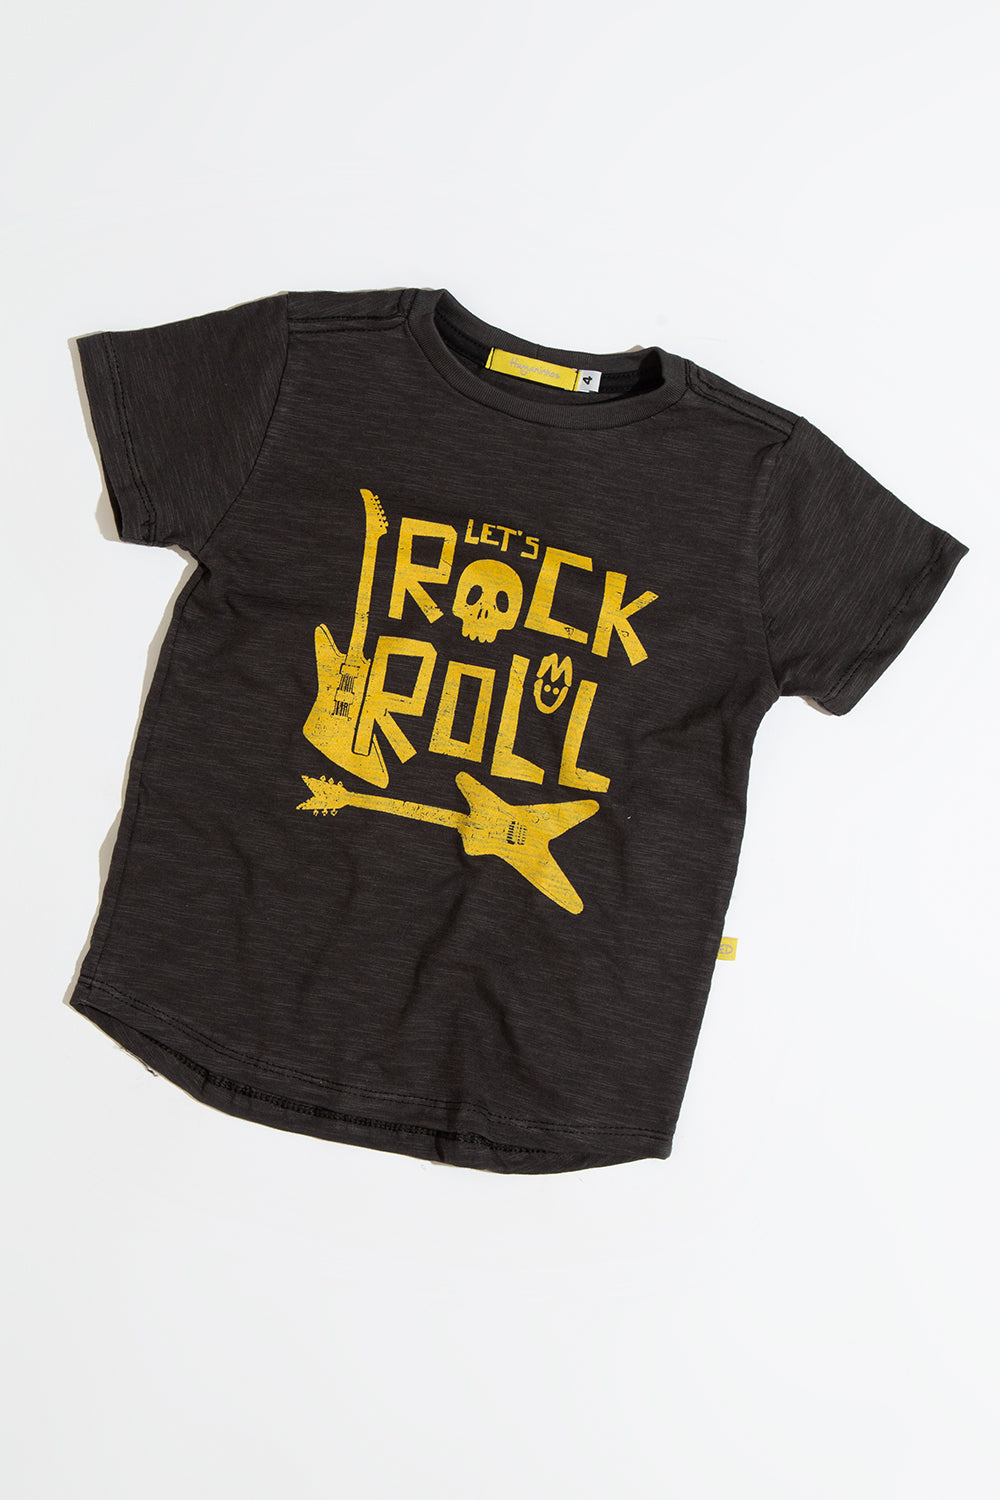 Camiseta Flamê Rock